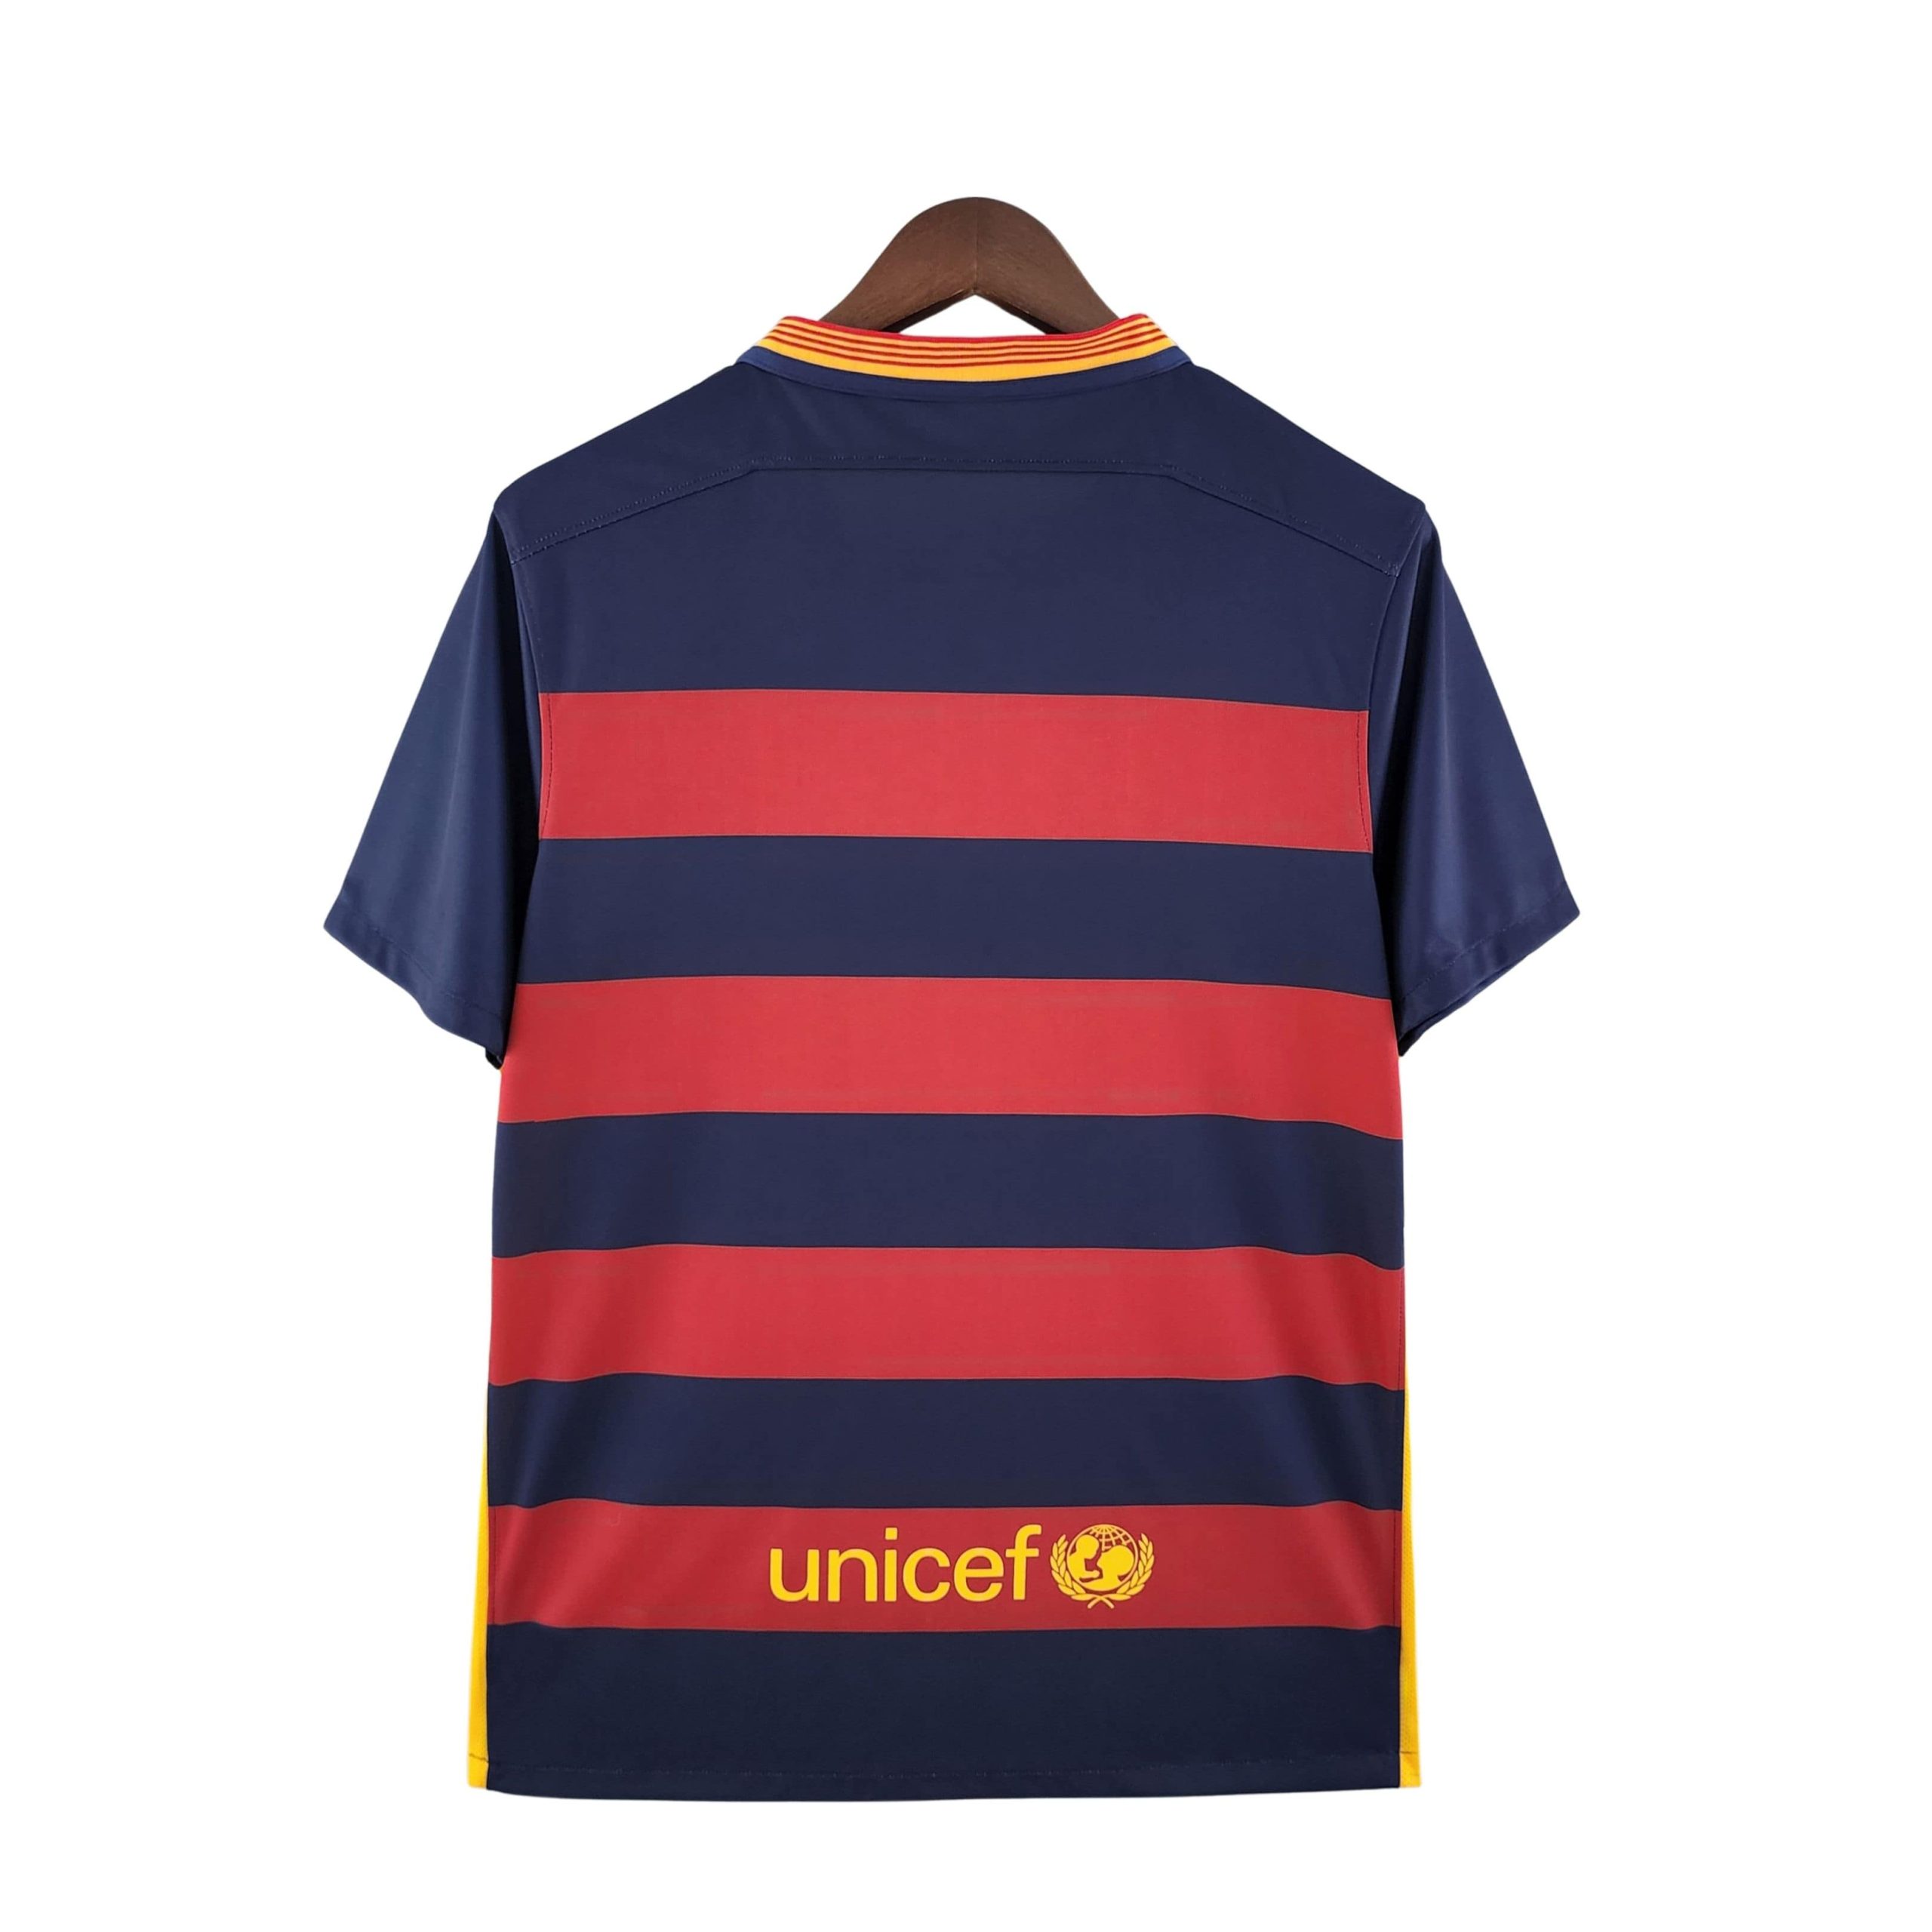 Camiseta del barcelona 2015-16